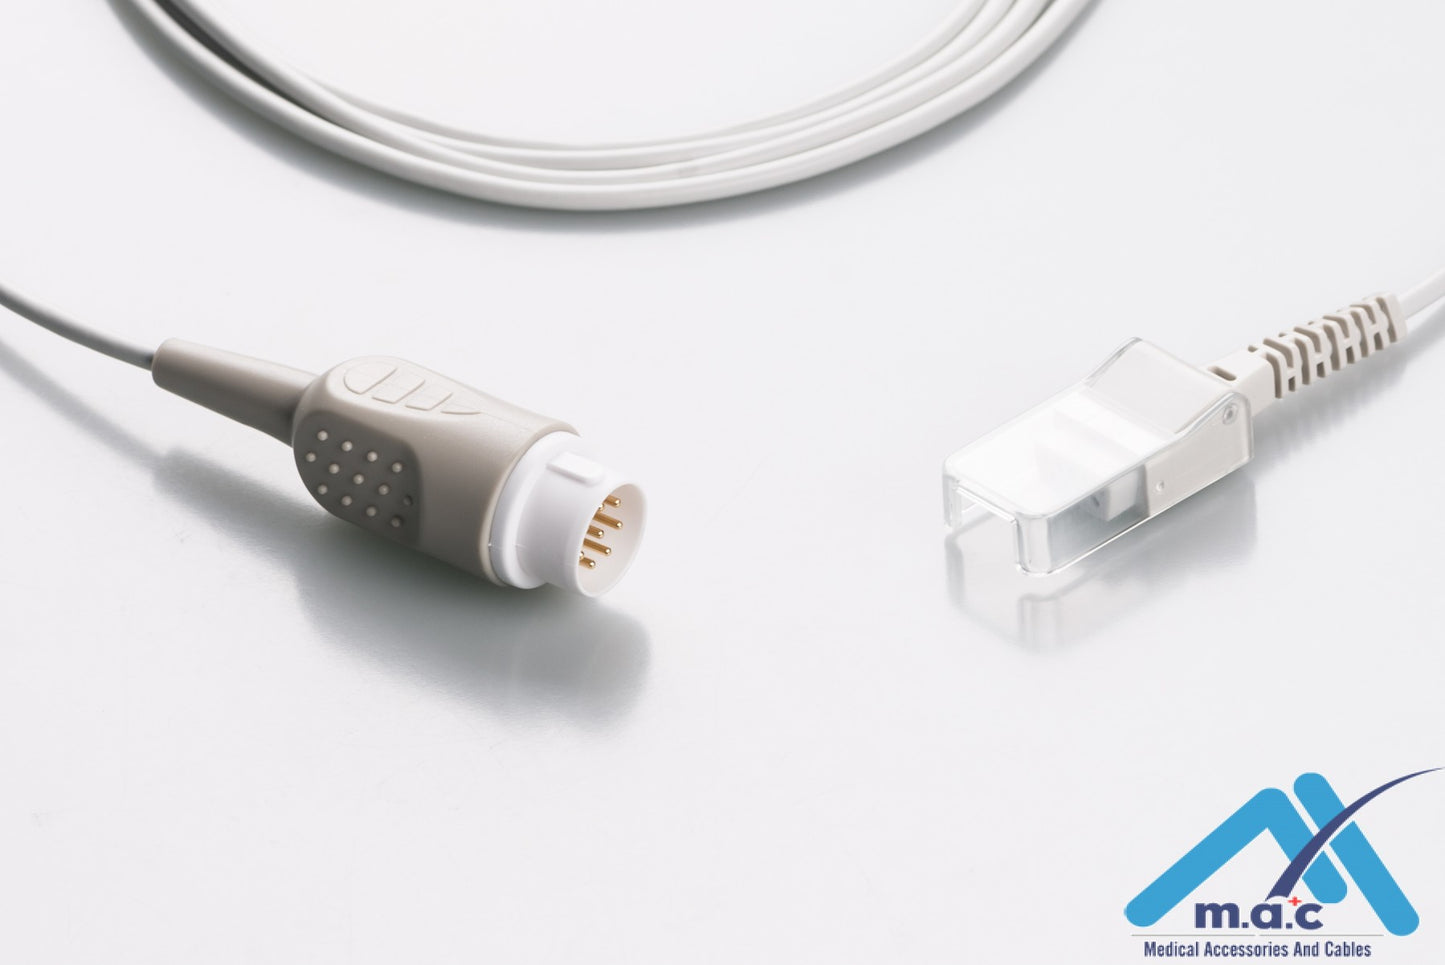 MEK Compatibility Interface Cable U7M10-56